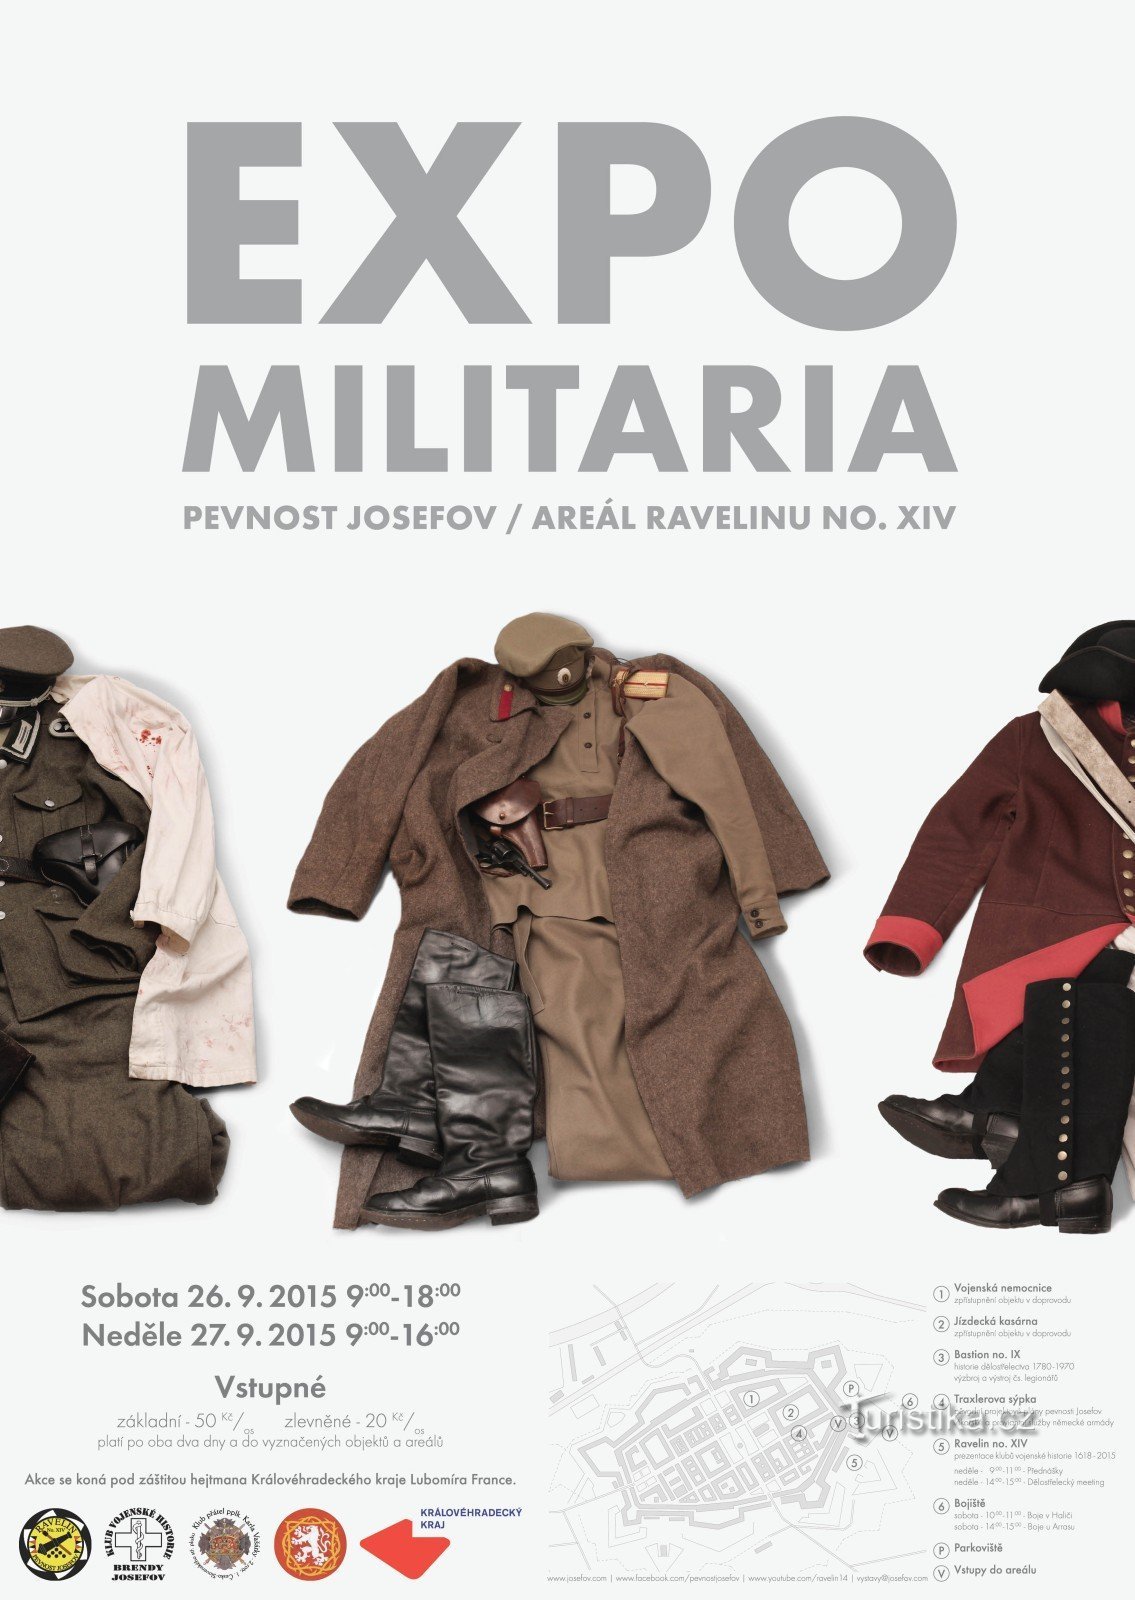 Wystawa Militaria